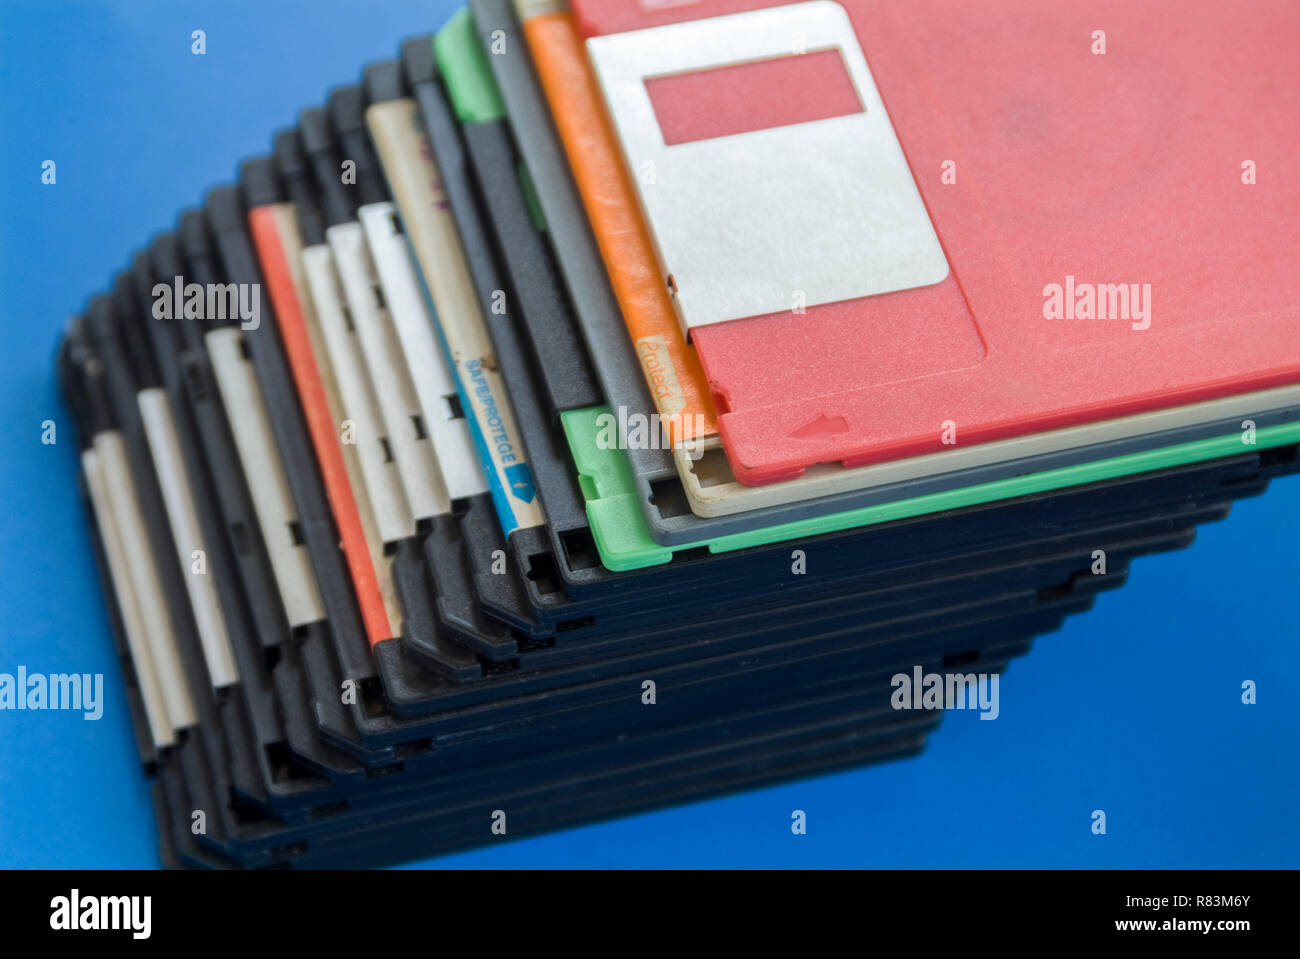 floppy disk 3.5 inch past computer storage Stock Photo